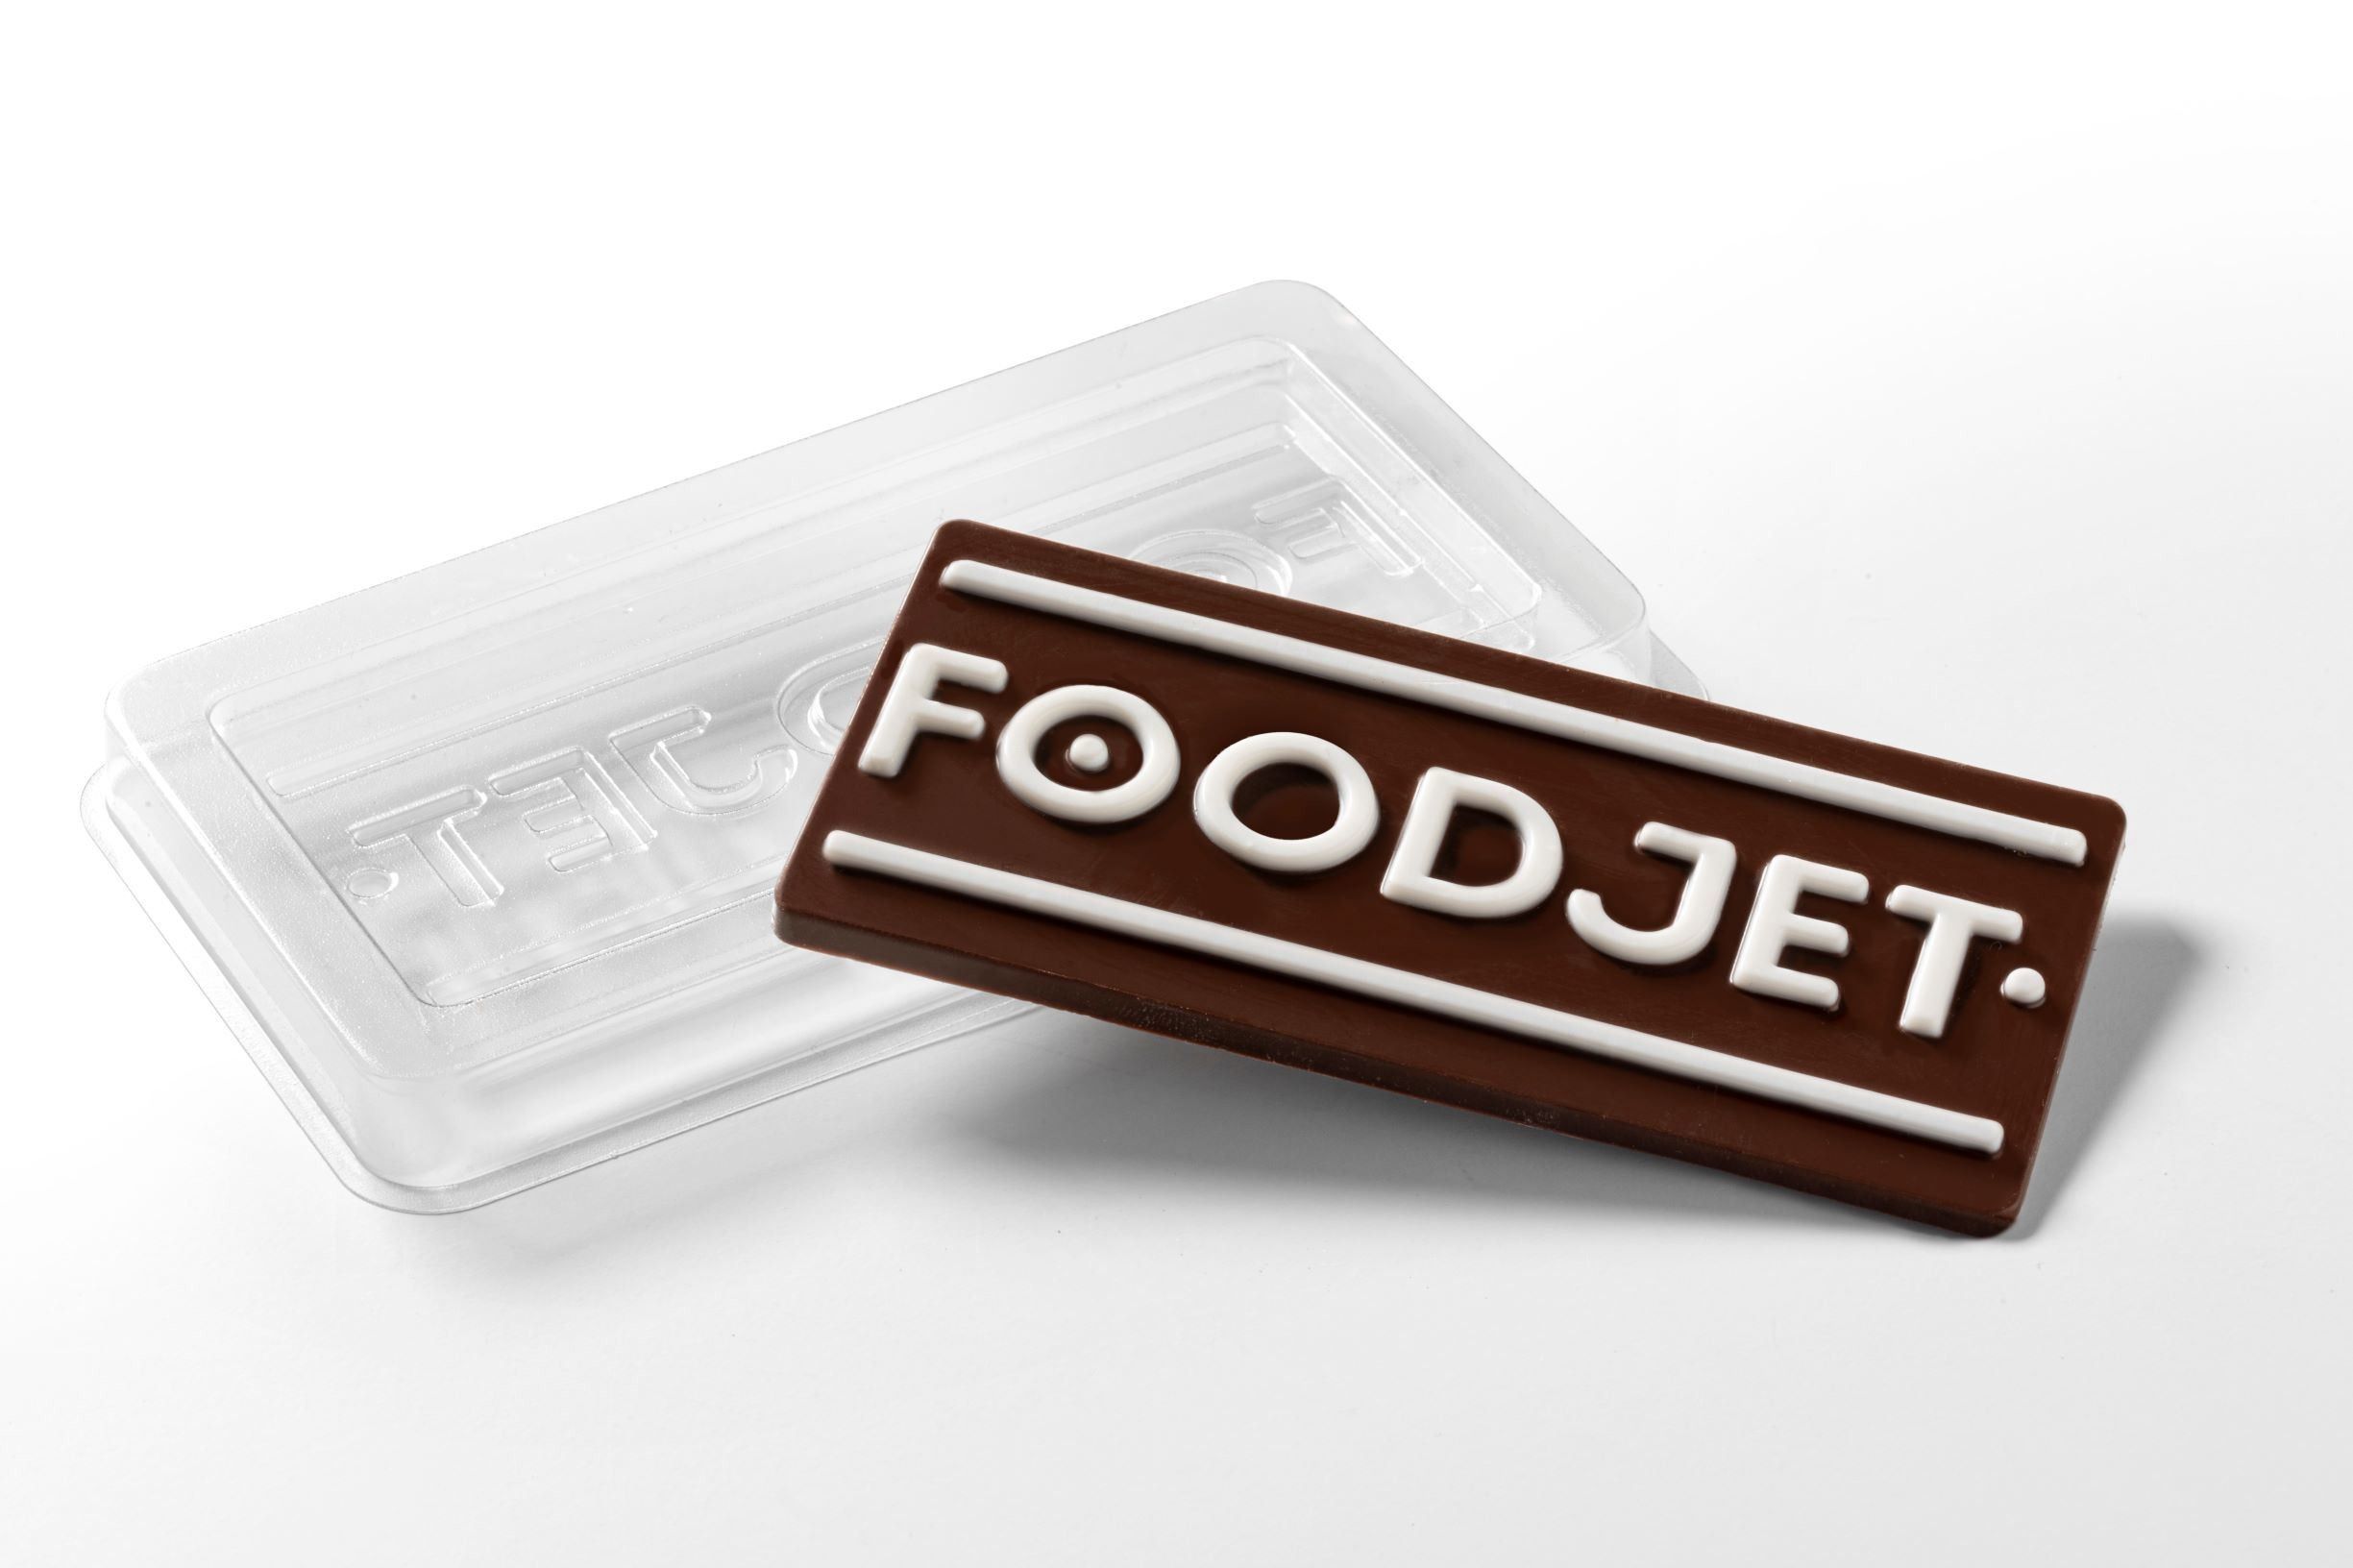 FoodJet chocolate bar